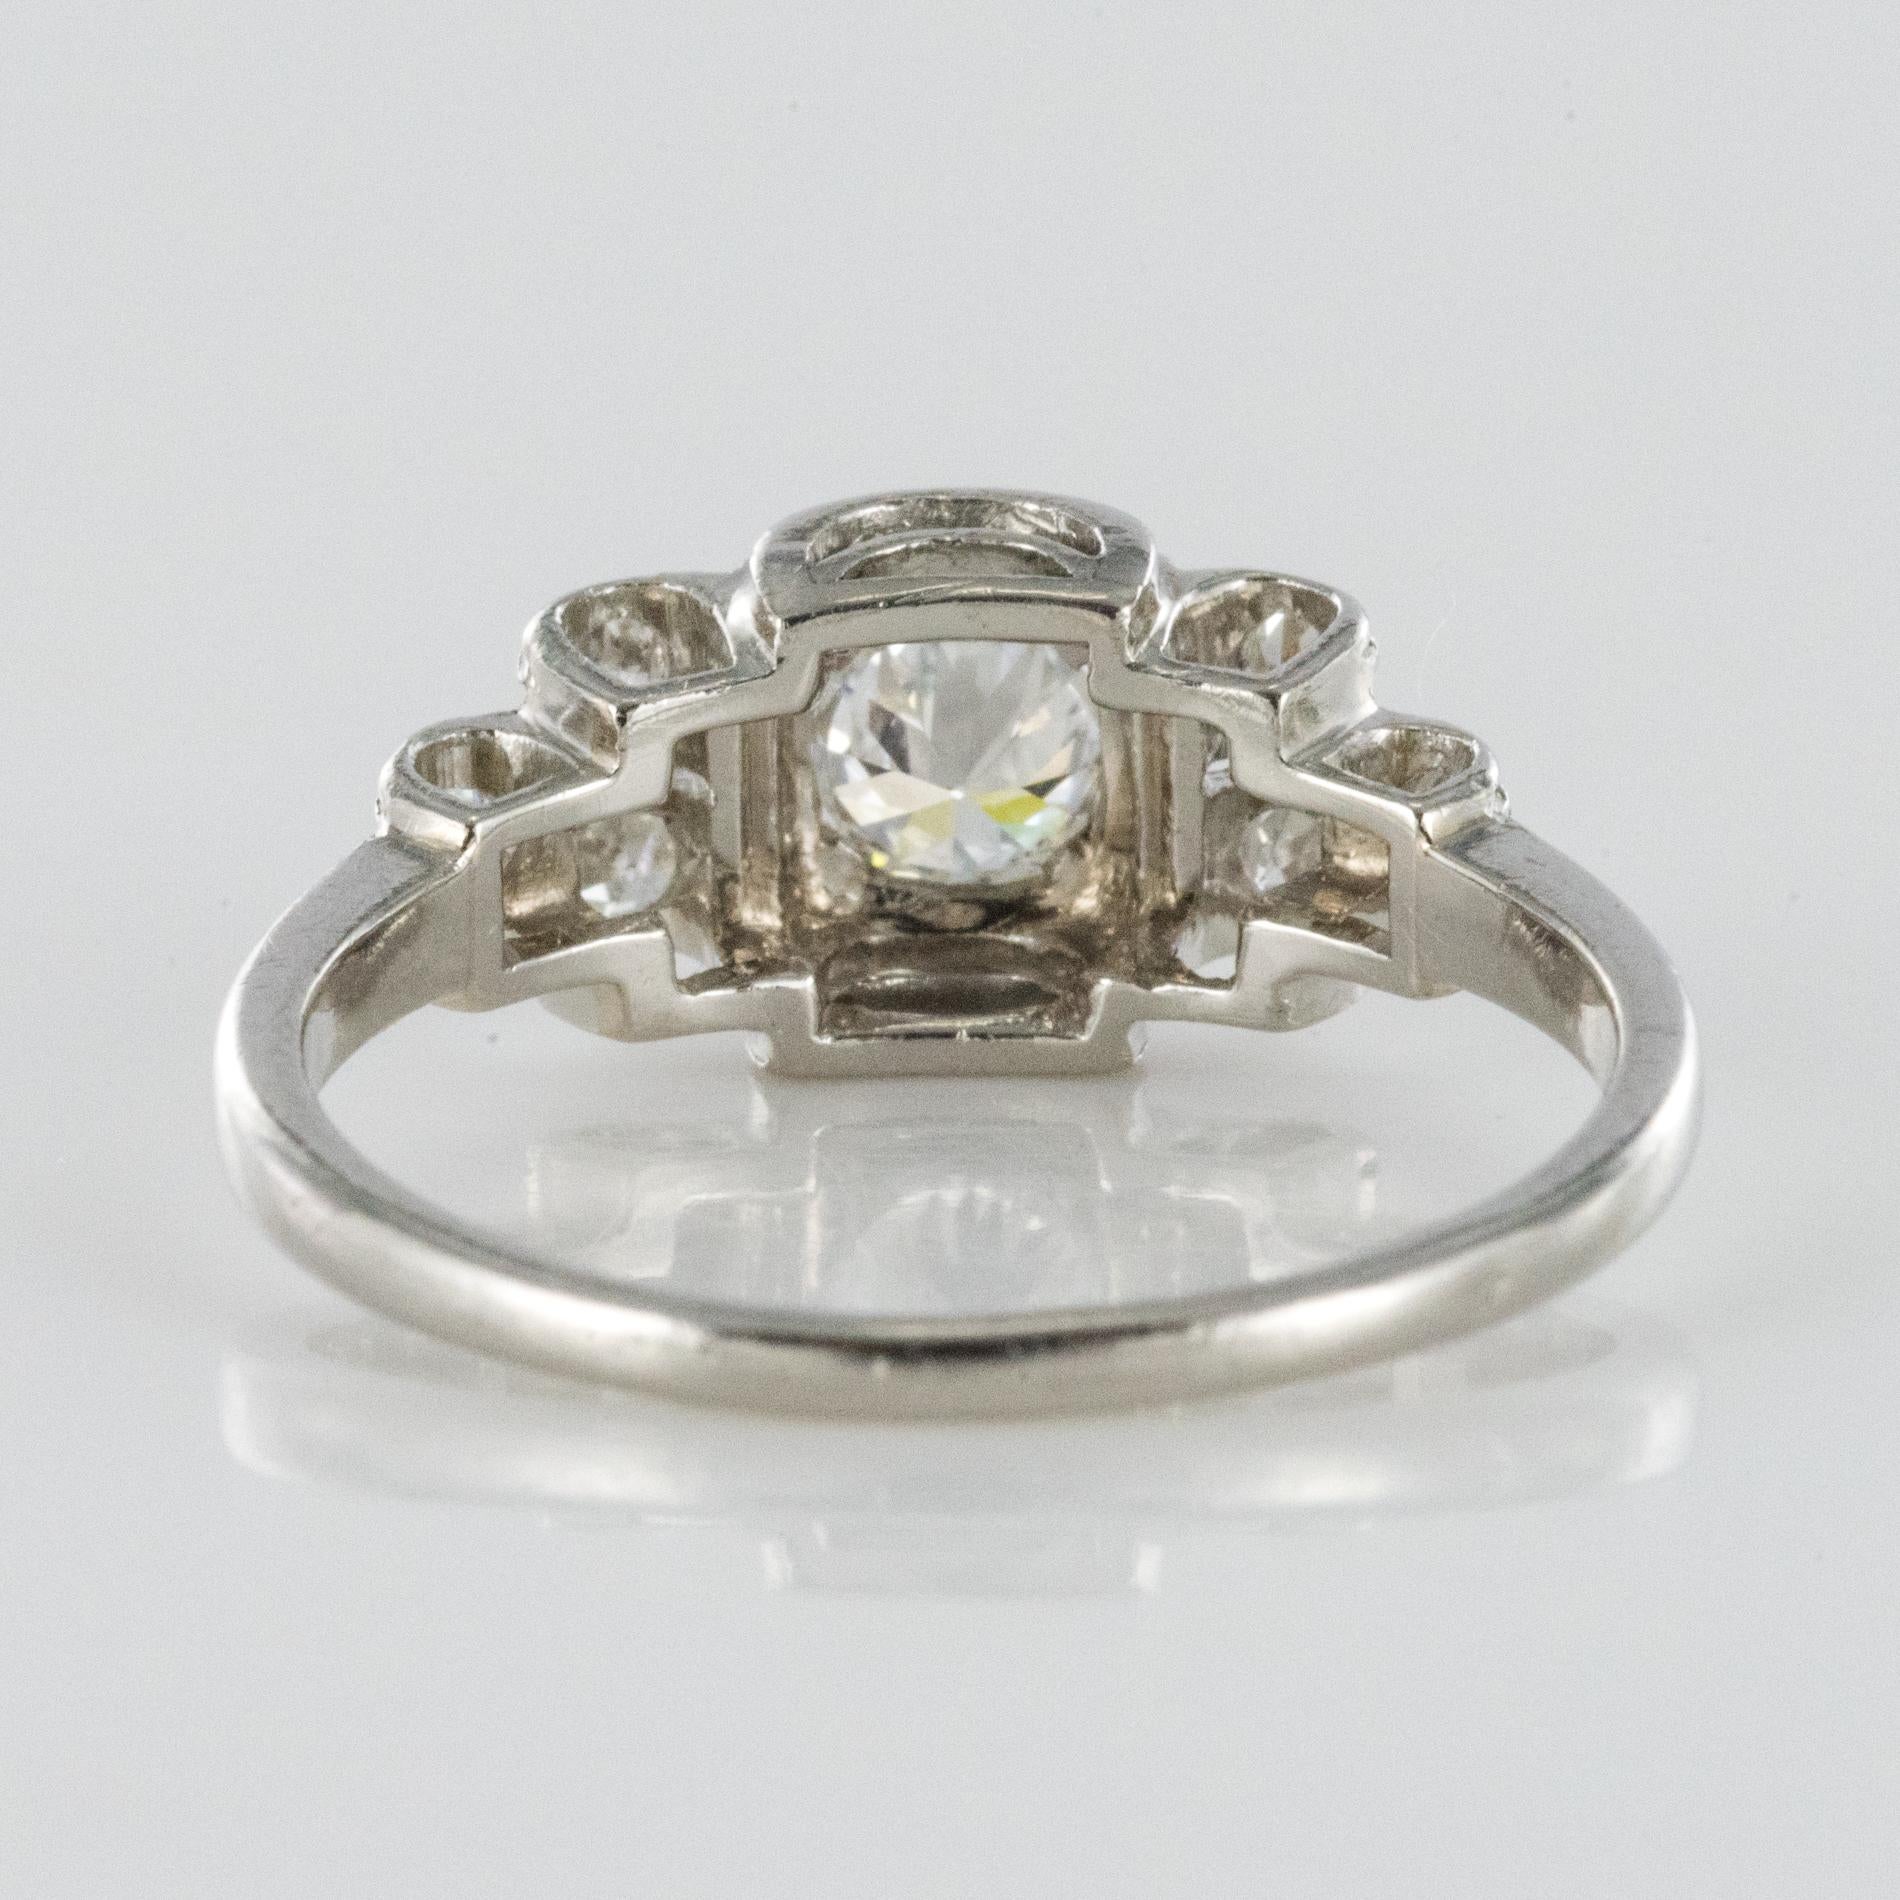 1925s French Art Deco 18 Karat White Gold Diamond Ring 4